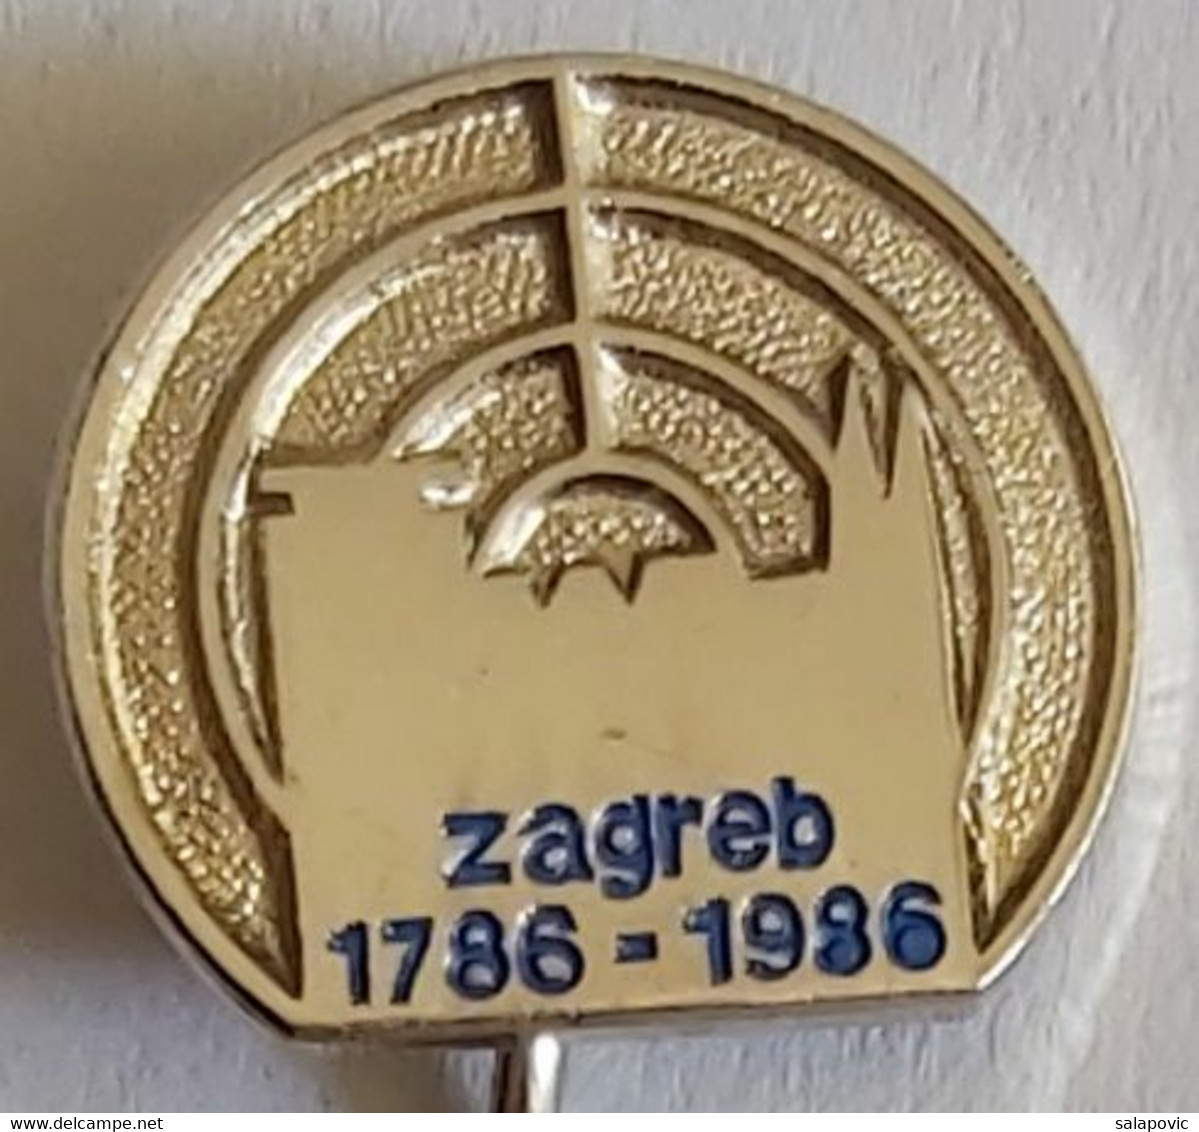 Zagreb 1786 - 1986 Croatia Archery Zagreb Shooting Association PIN A6/2 - Tiro Con L'Arco